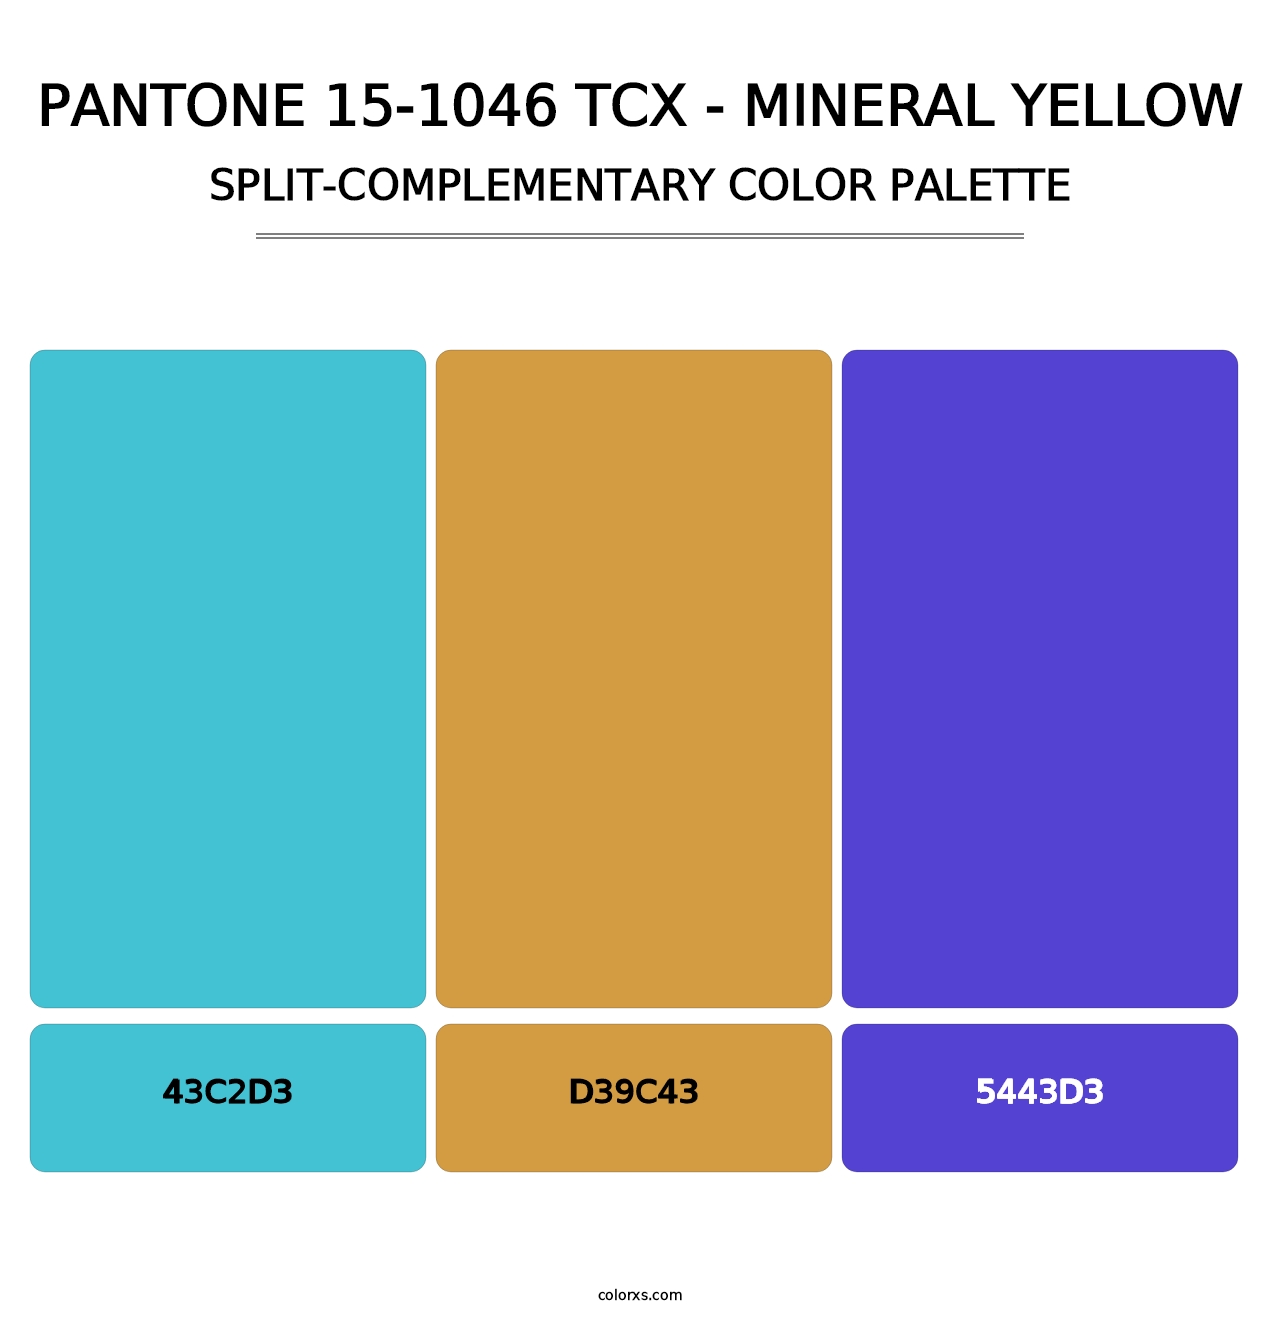 PANTONE 15-1046 TCX - Mineral Yellow - Split-Complementary Color Palette